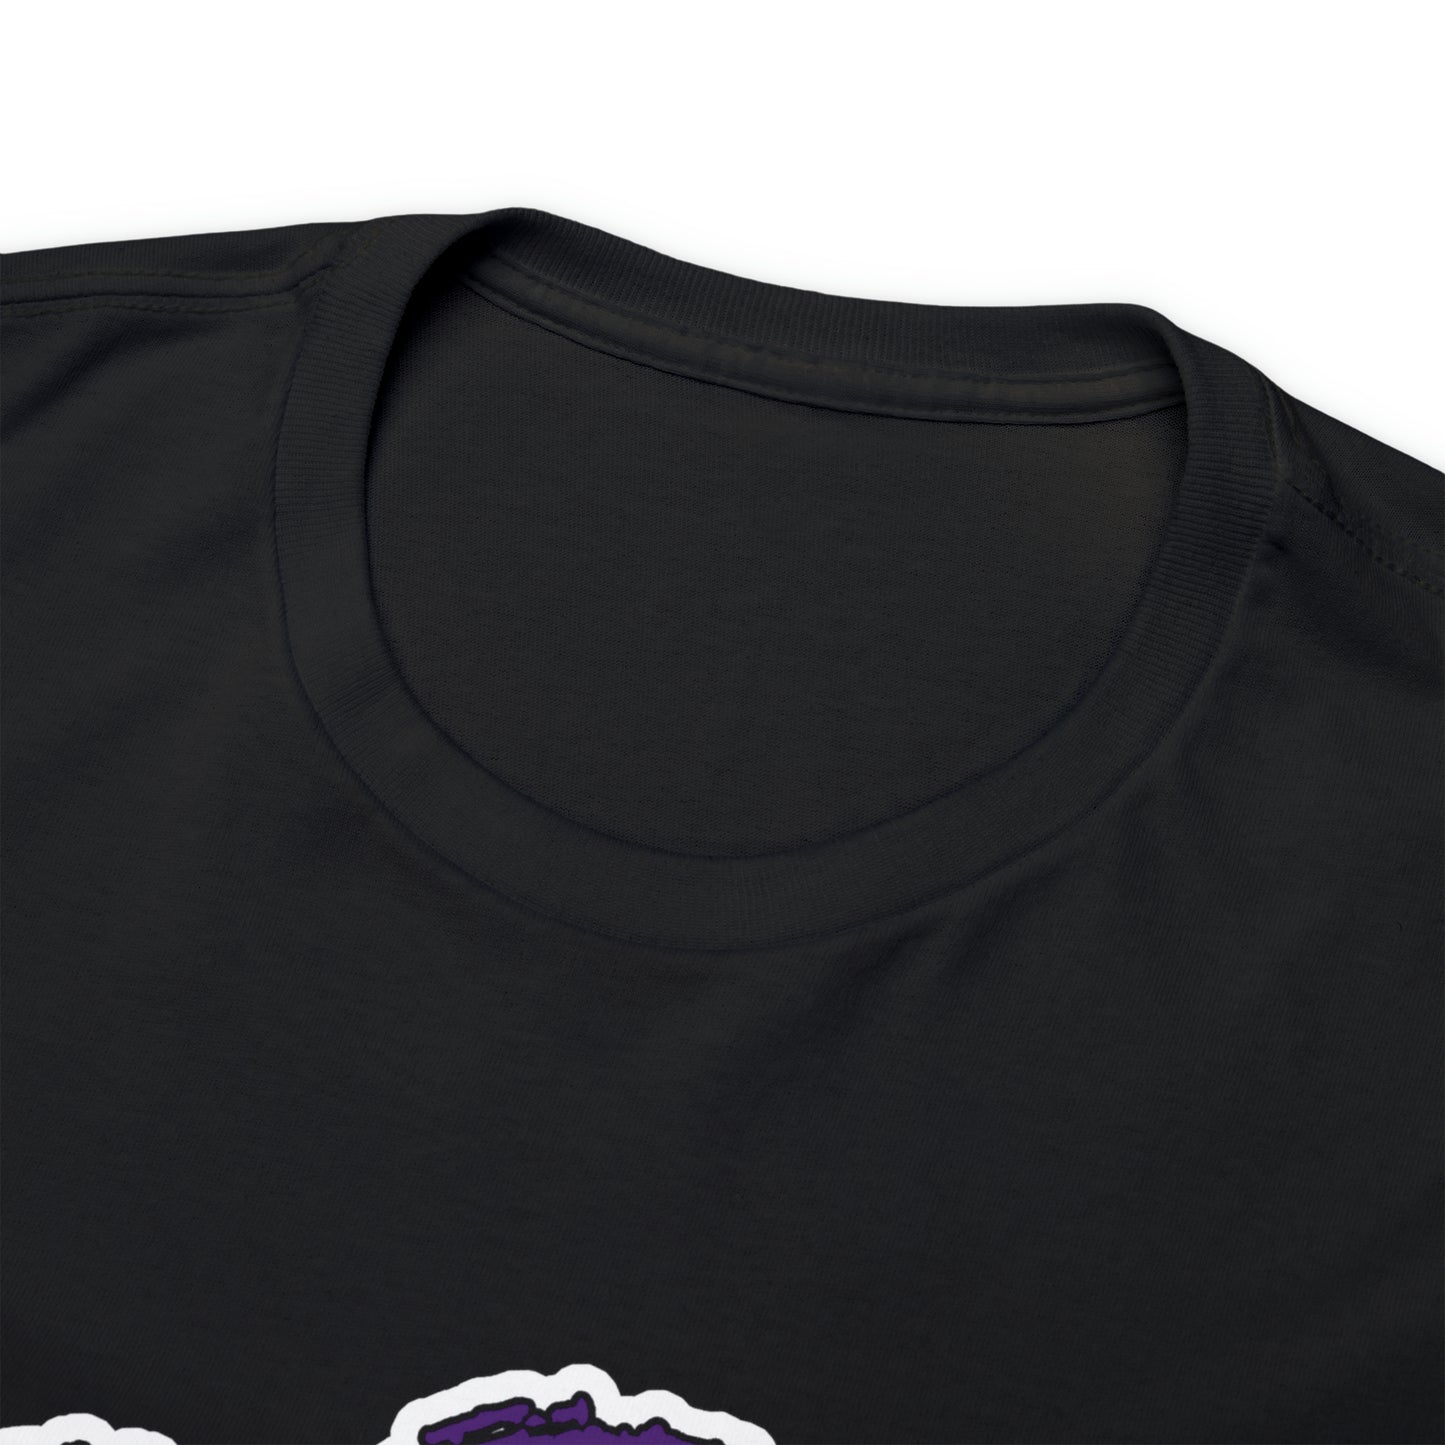 Str8jaket "Purple" Variant T-Shirt